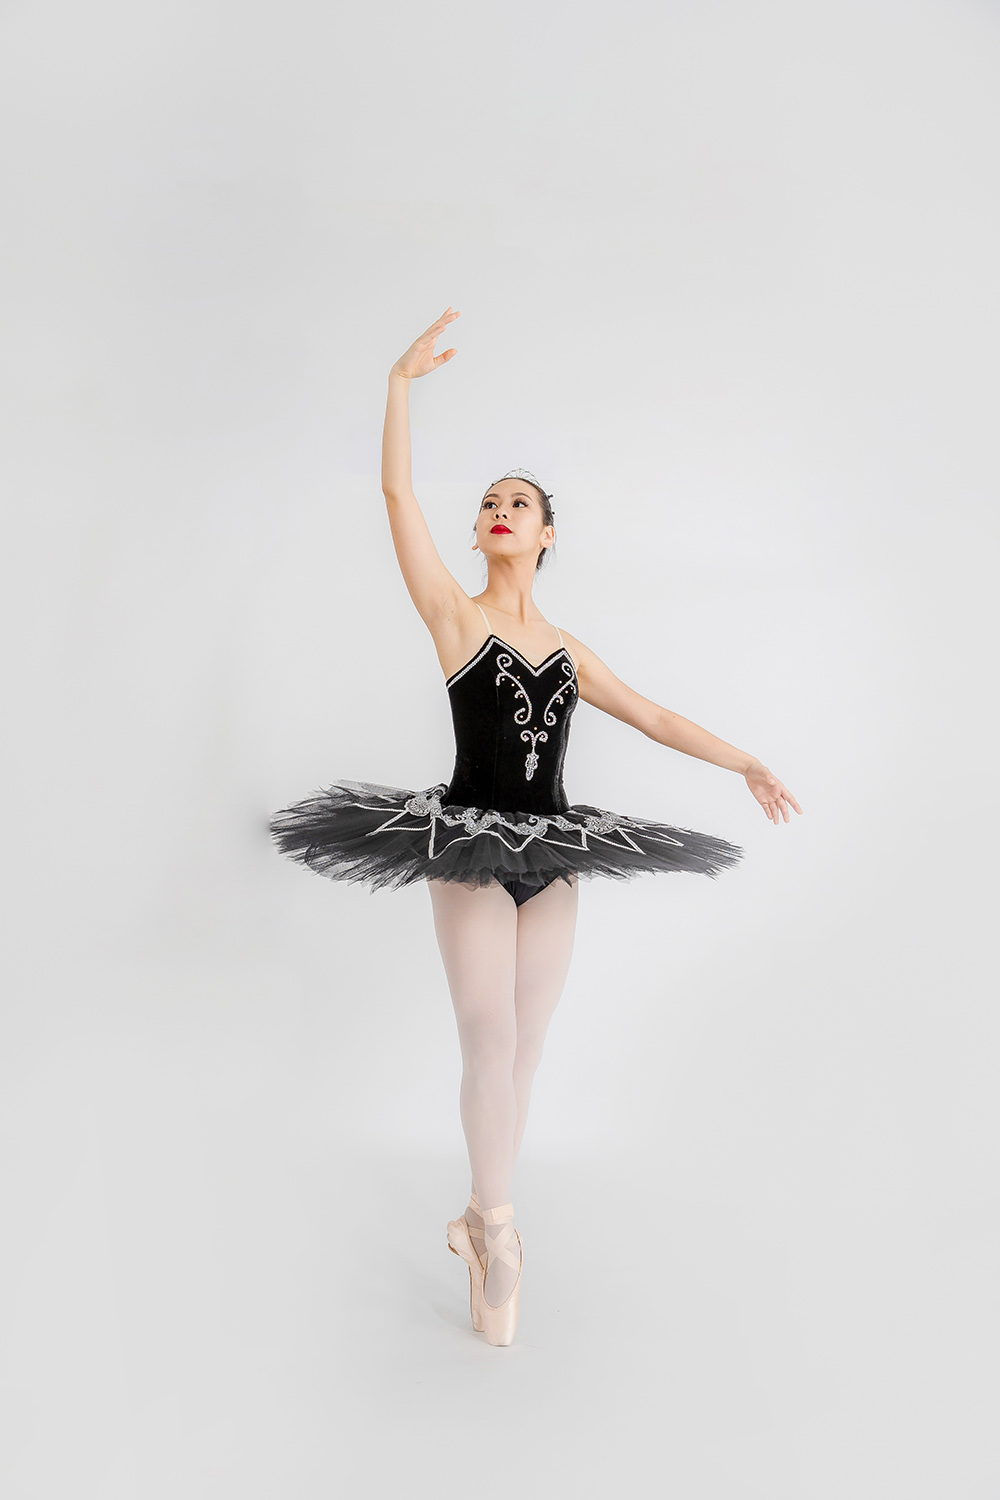 Elegance Ballet Studio Dancer